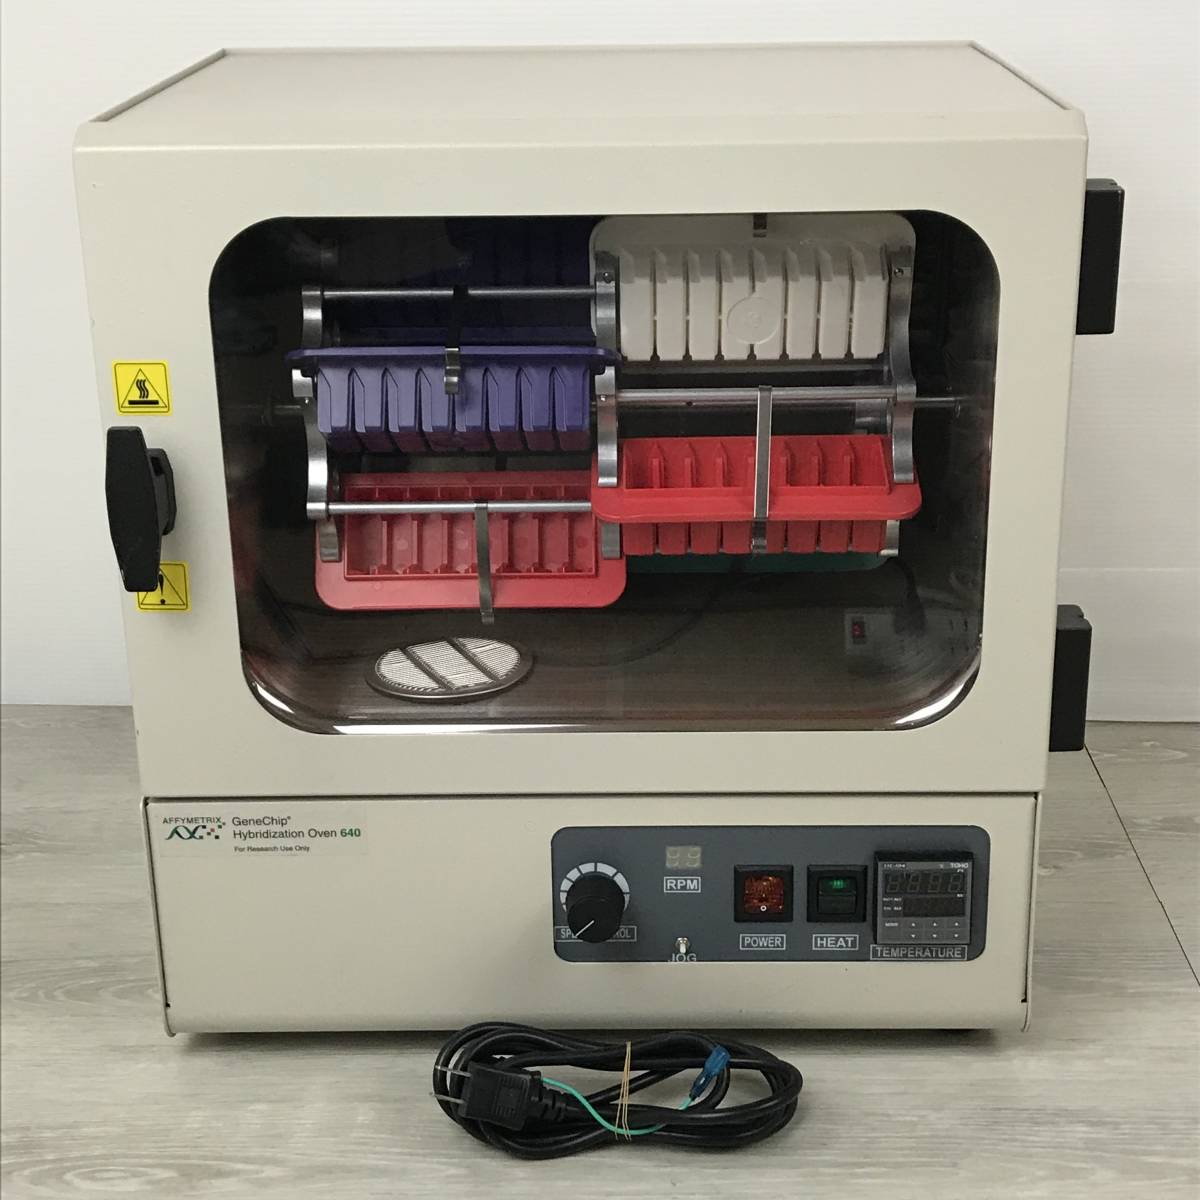 GENE CHIP 640 ハイブリダイゼーションオーブン 通電 DNA マイクロアレイ 測定器